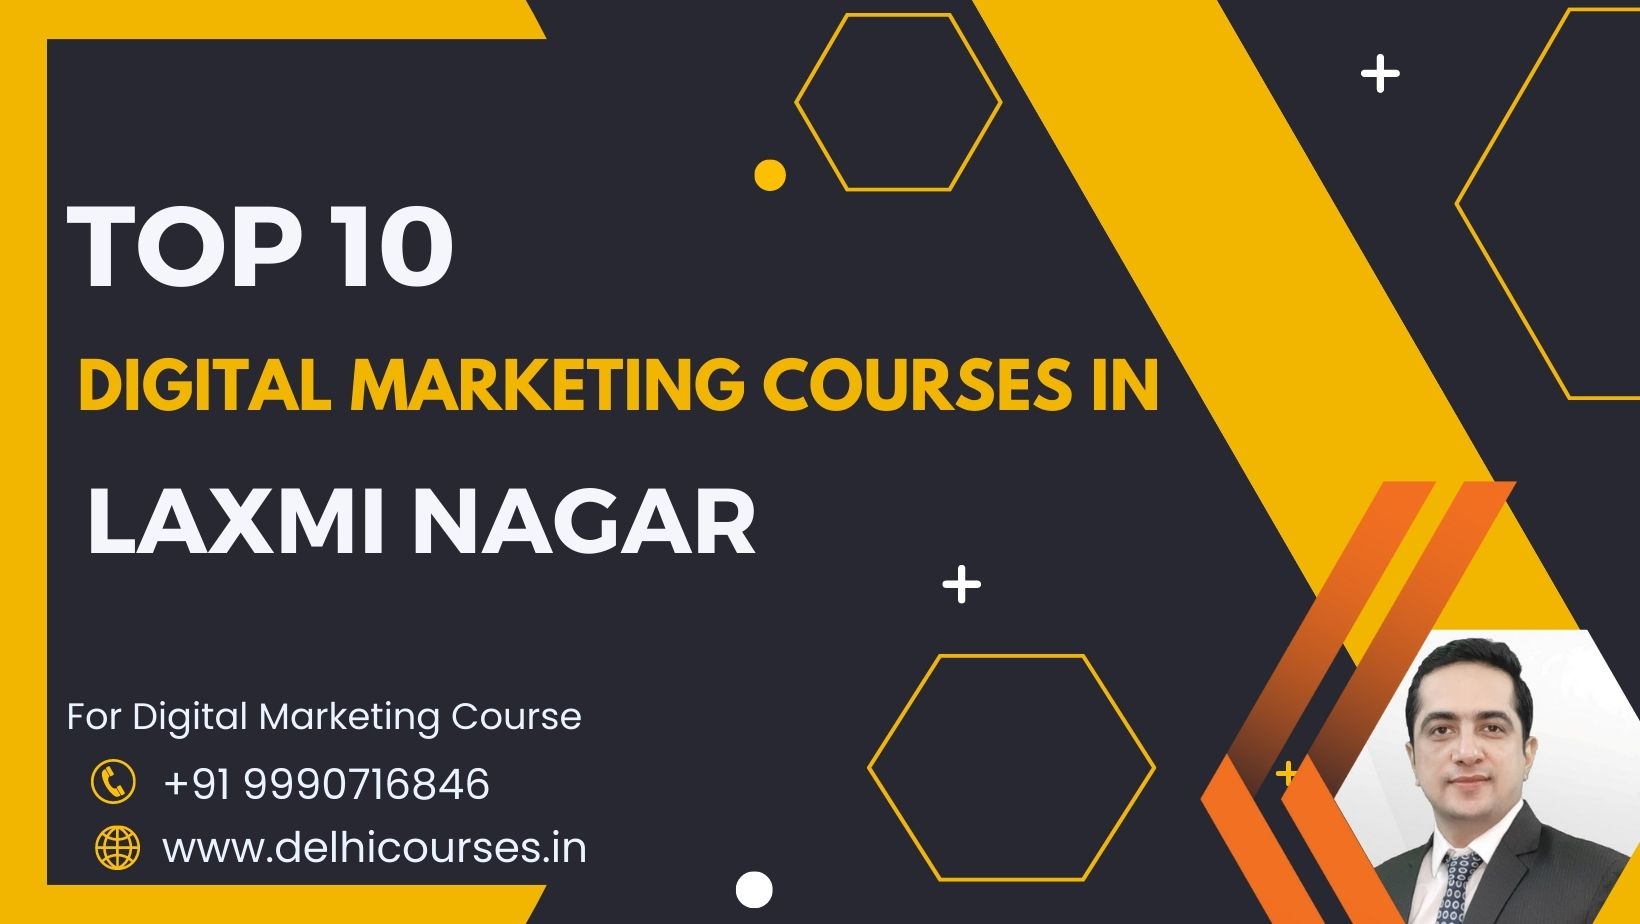 Top 10 Digital Marketing Courses in Laxmi Nagar